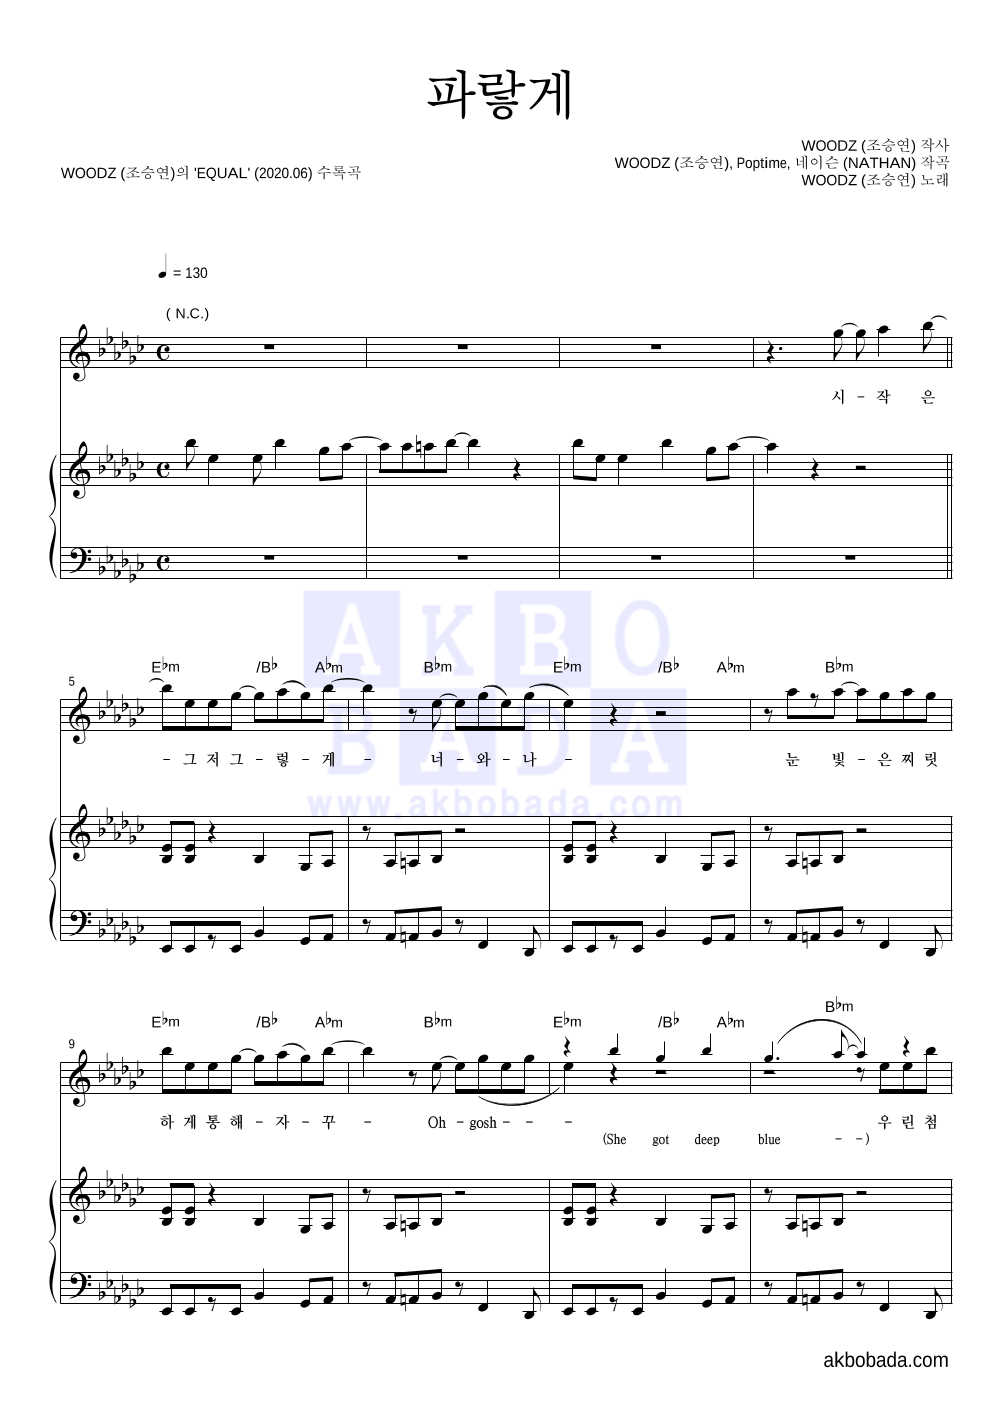 WOODZ(우즈) - 파랗게 피아노 3단 악보 